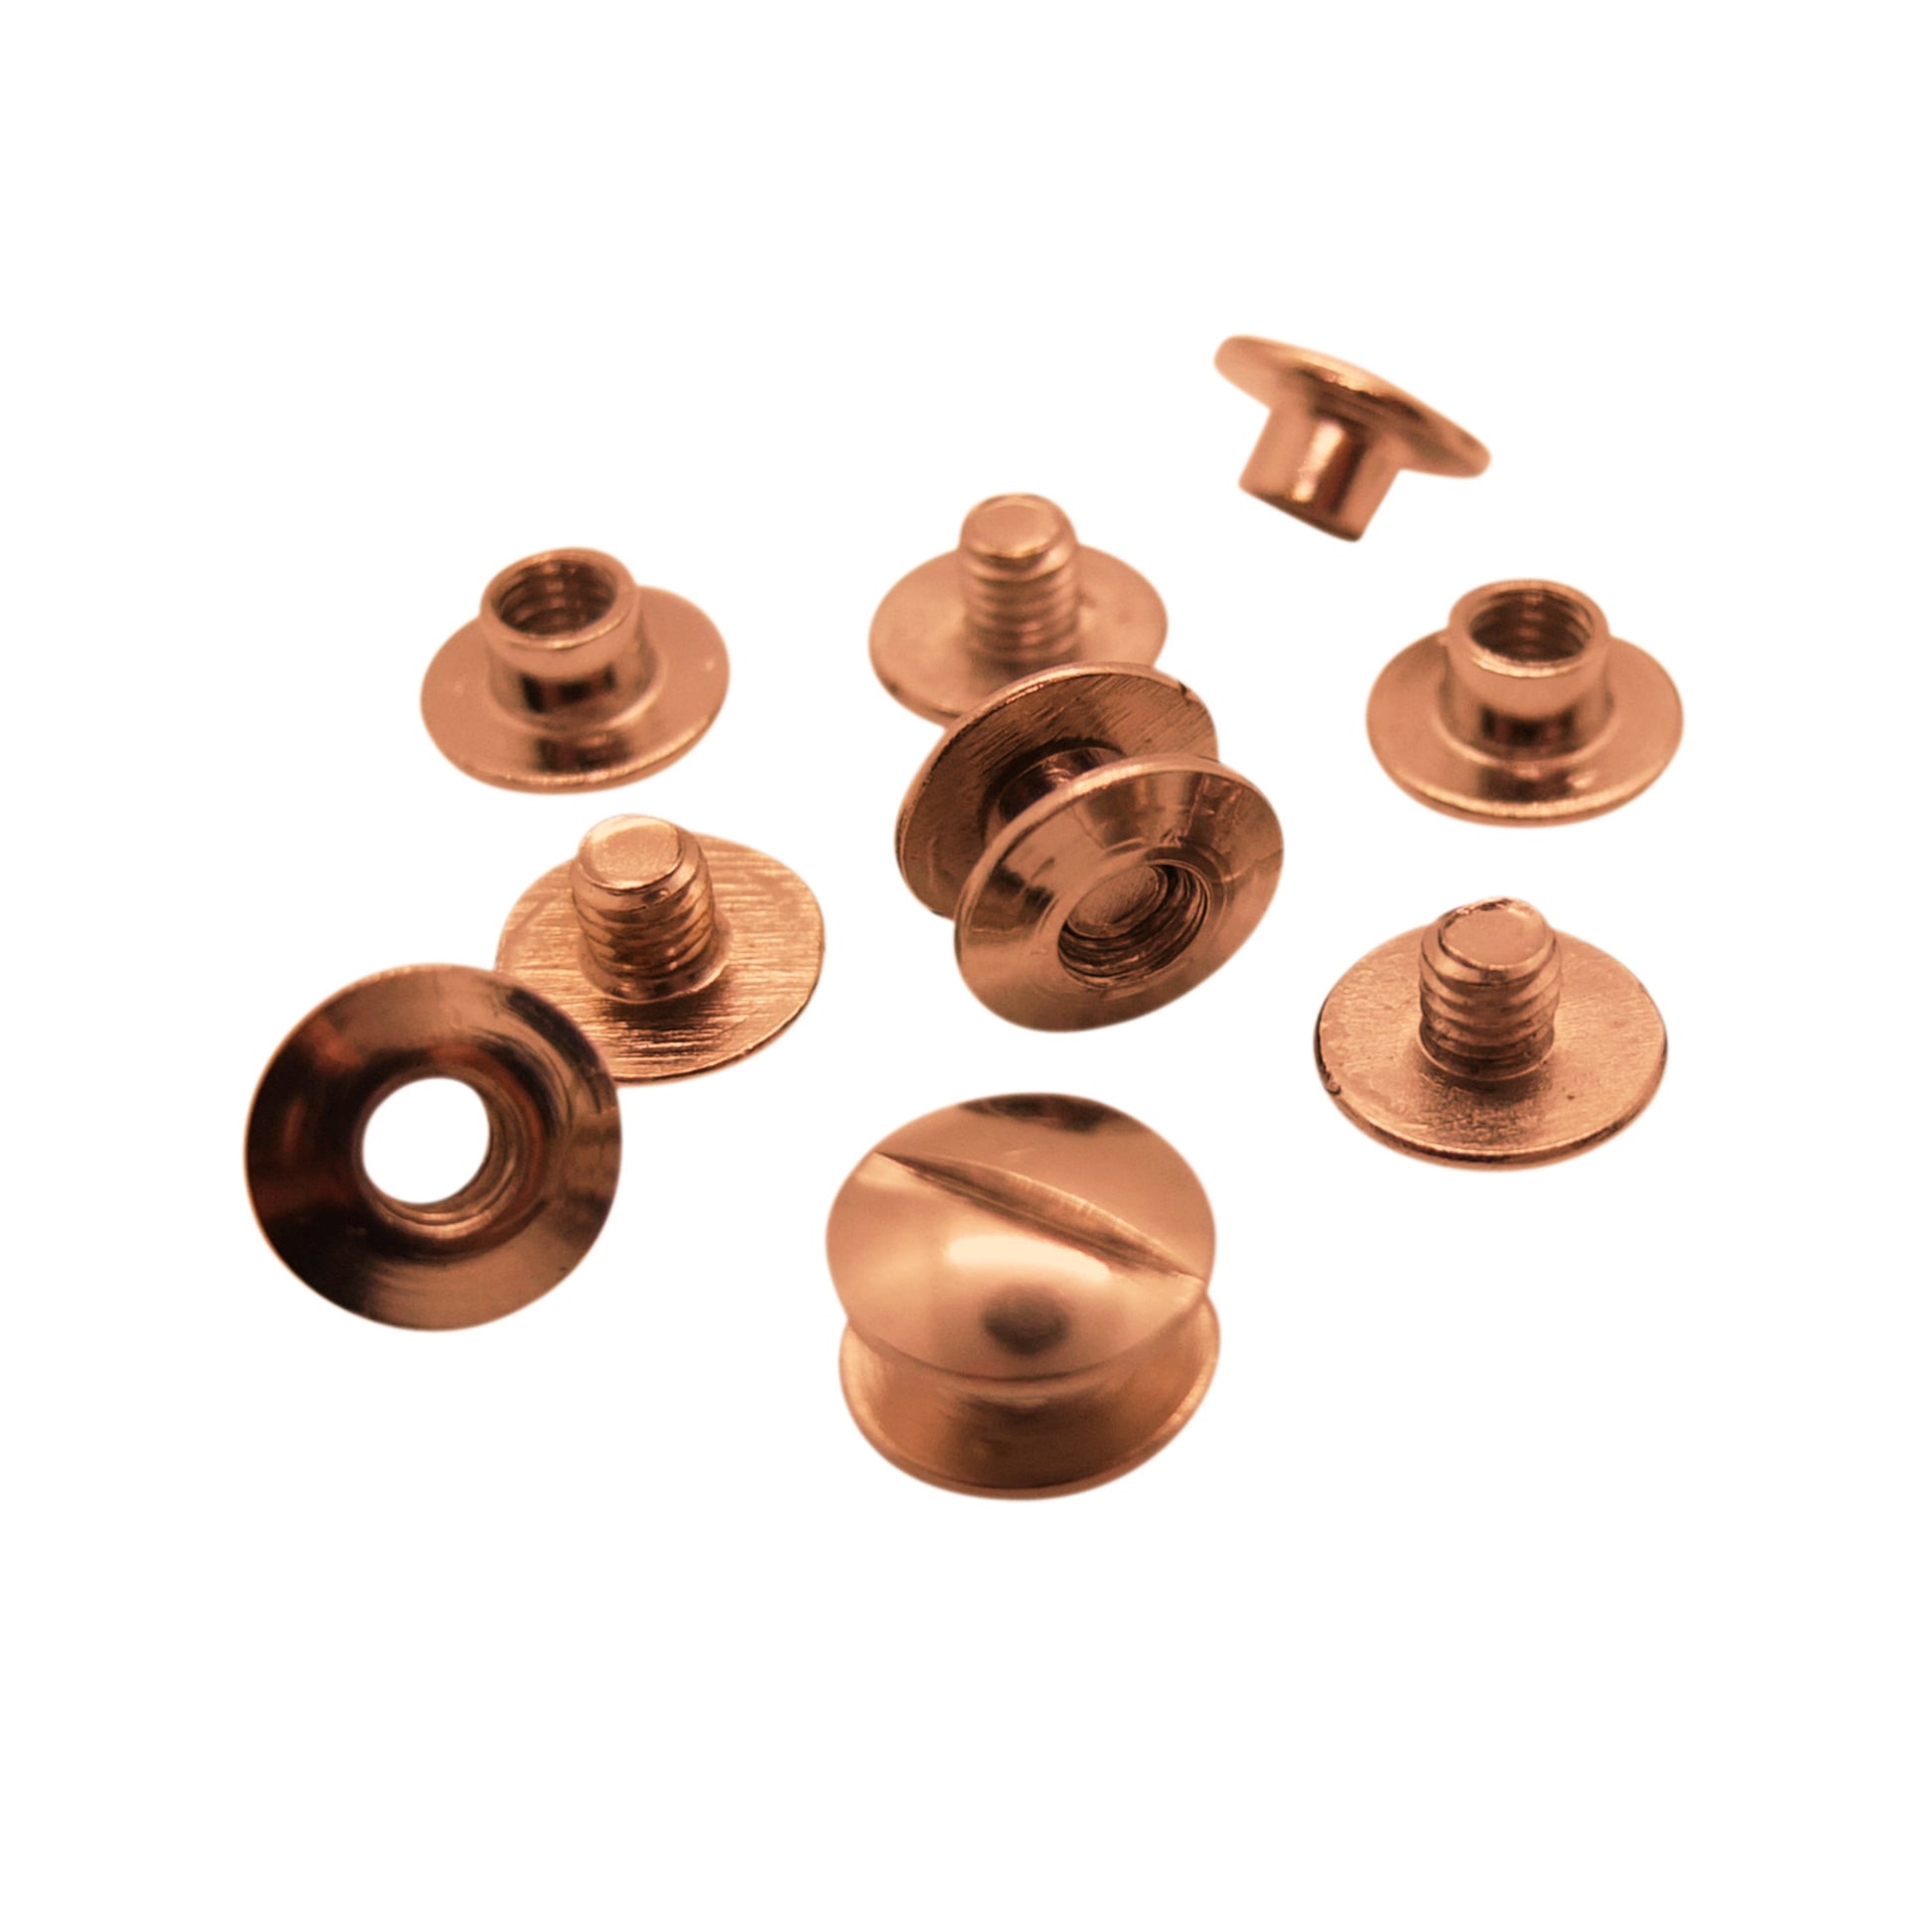 Copper / Rose-gold Book Binding Screws by Gobrecht & Ulrich - 2 to 3.5mm length